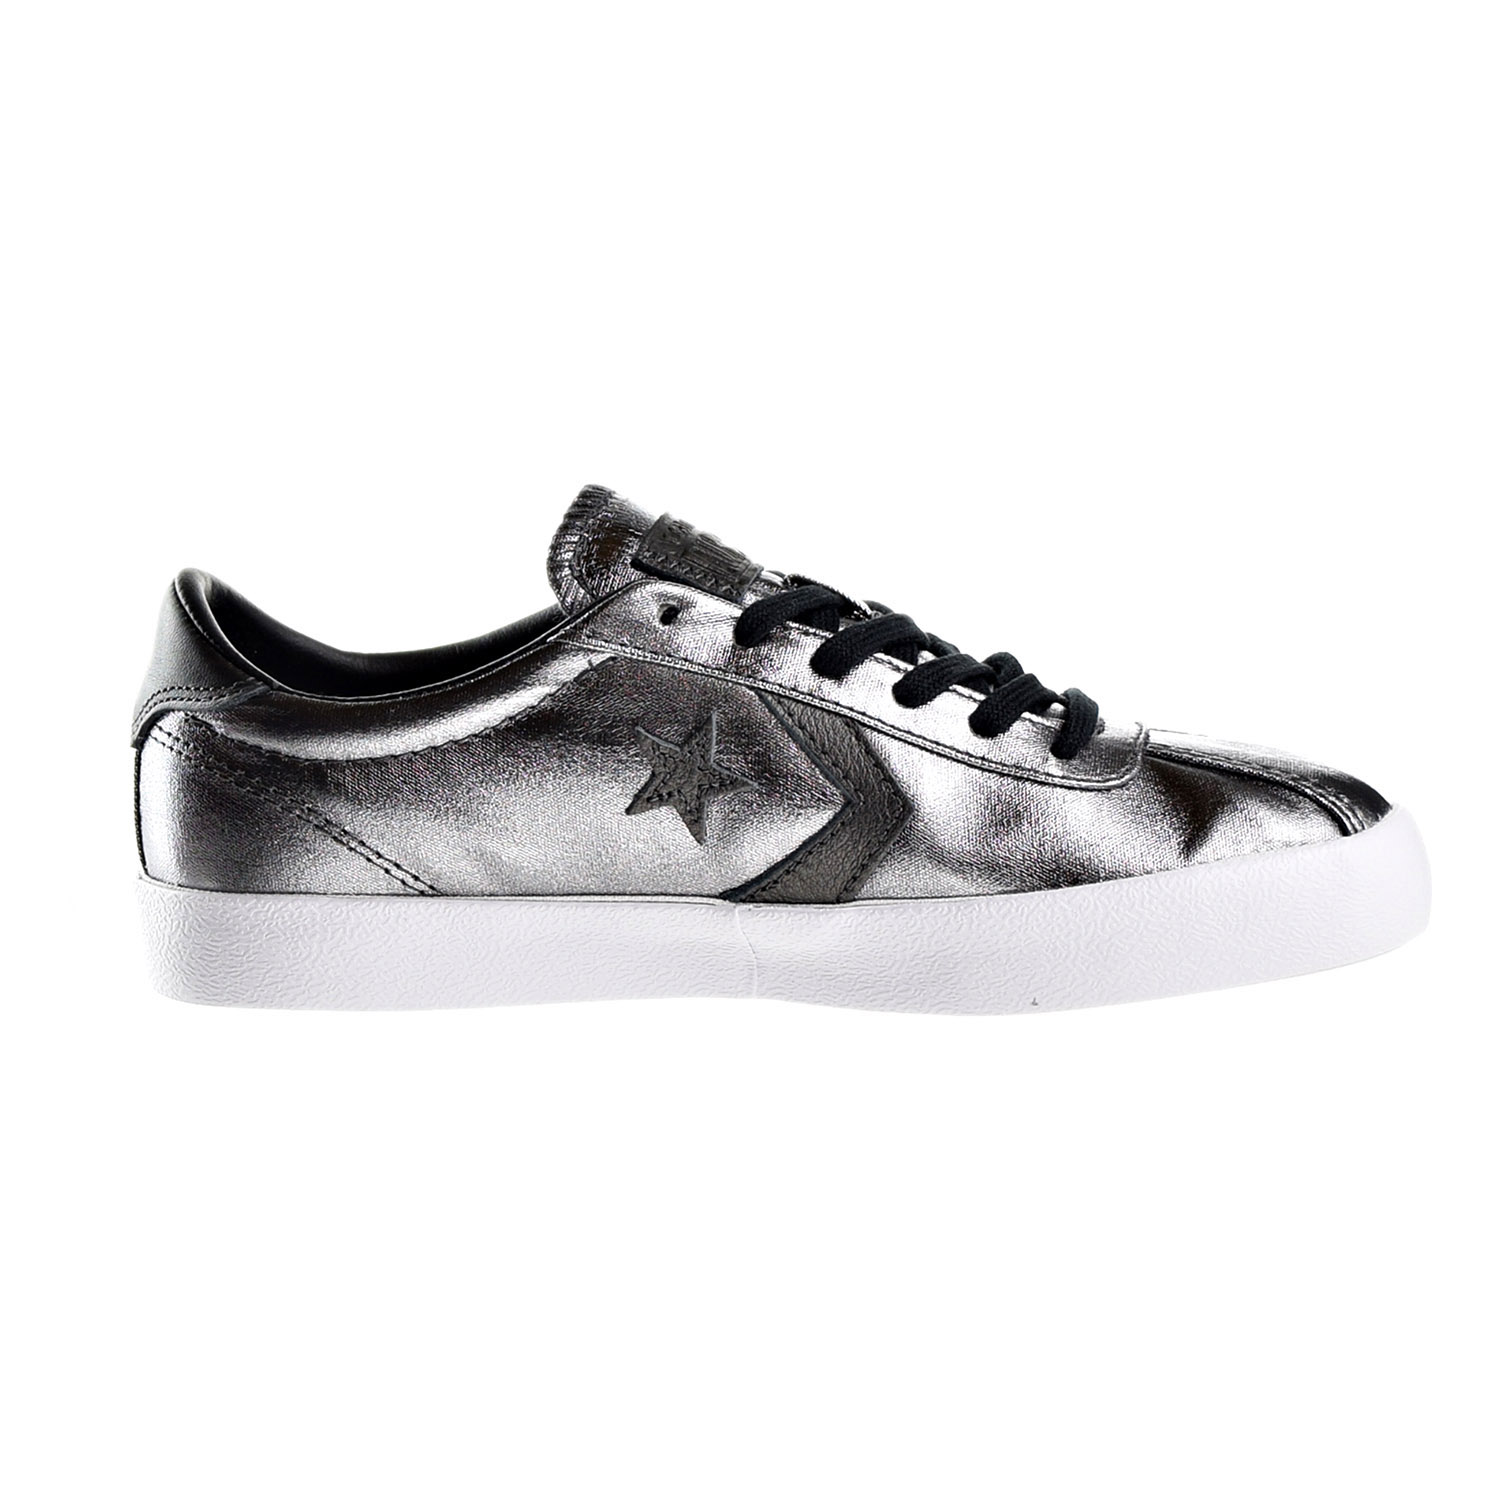 Converse Breakpoint Metallic Canvas Low Top Women's Shoes Black Pearl/White  555950C ( B(M) US)